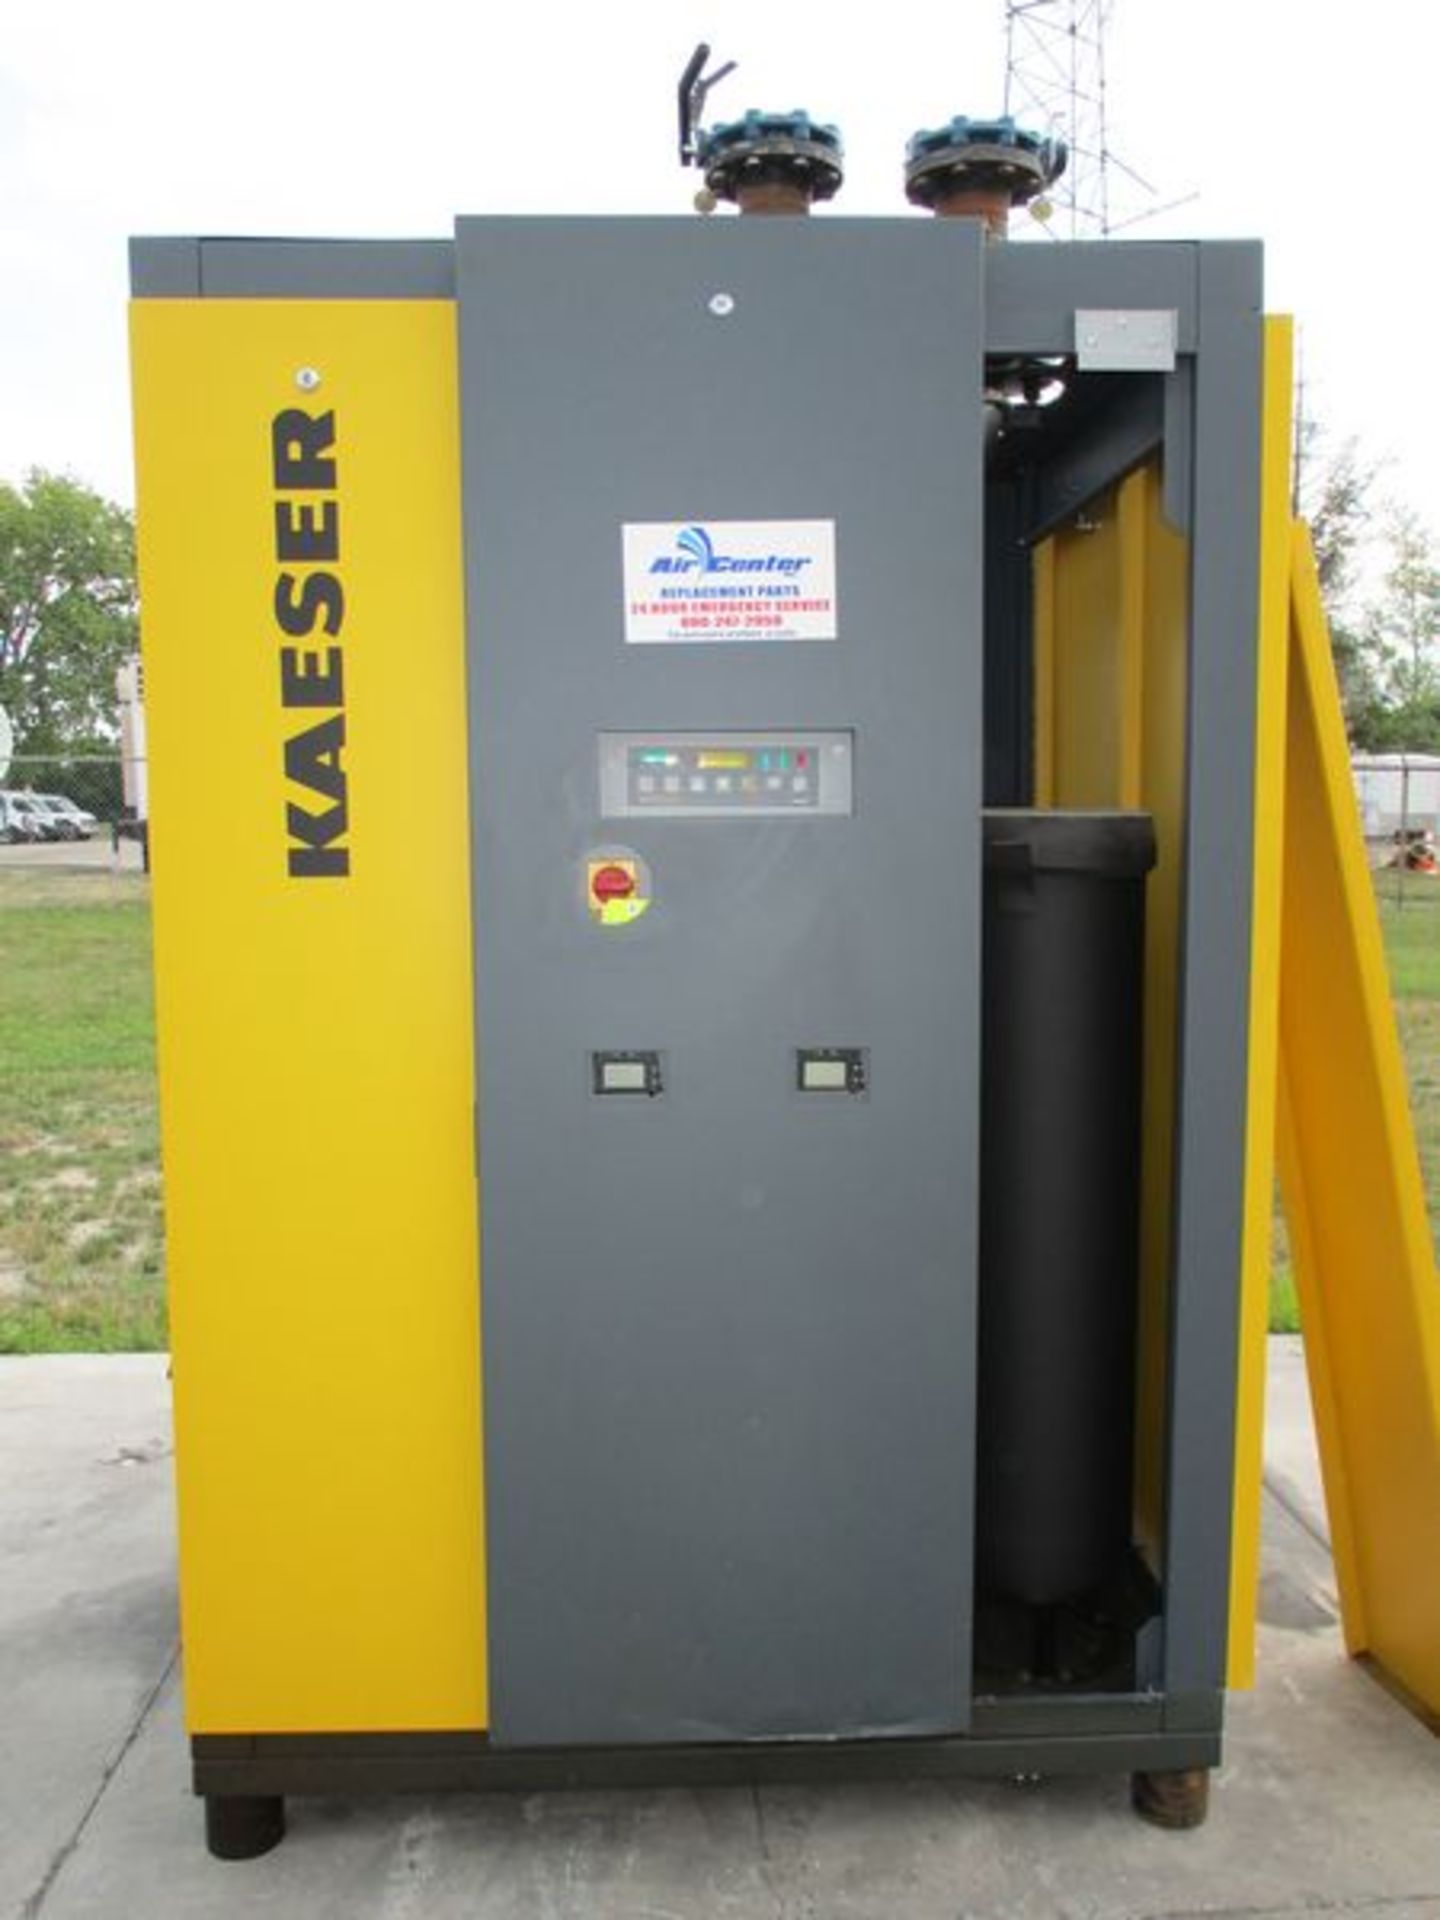 Kaeser Air dryer Model TI601 WC - Sterling Heights, MI